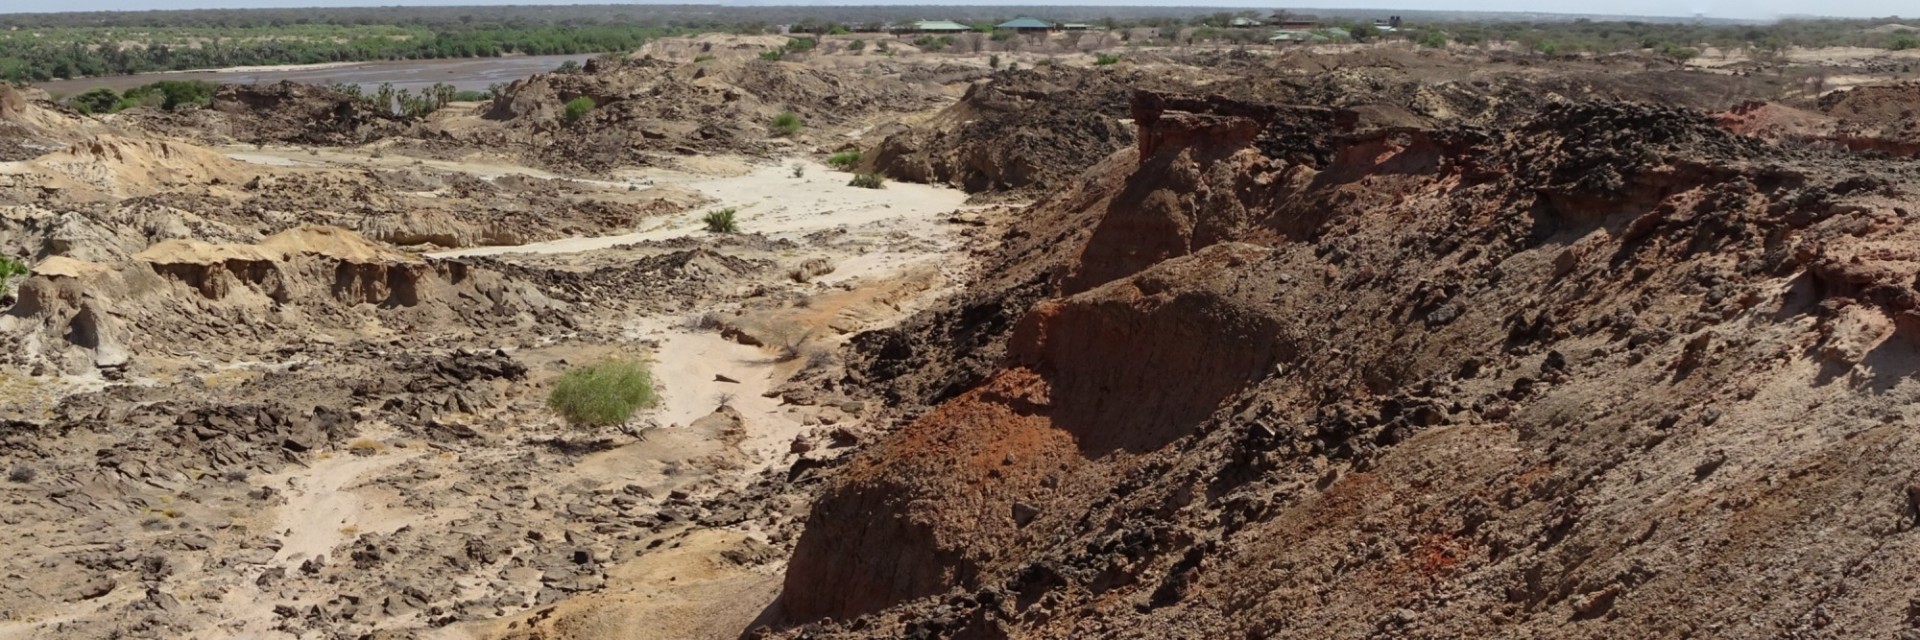 A sedimentary boundary in the hills around the Turkana Basin Institute